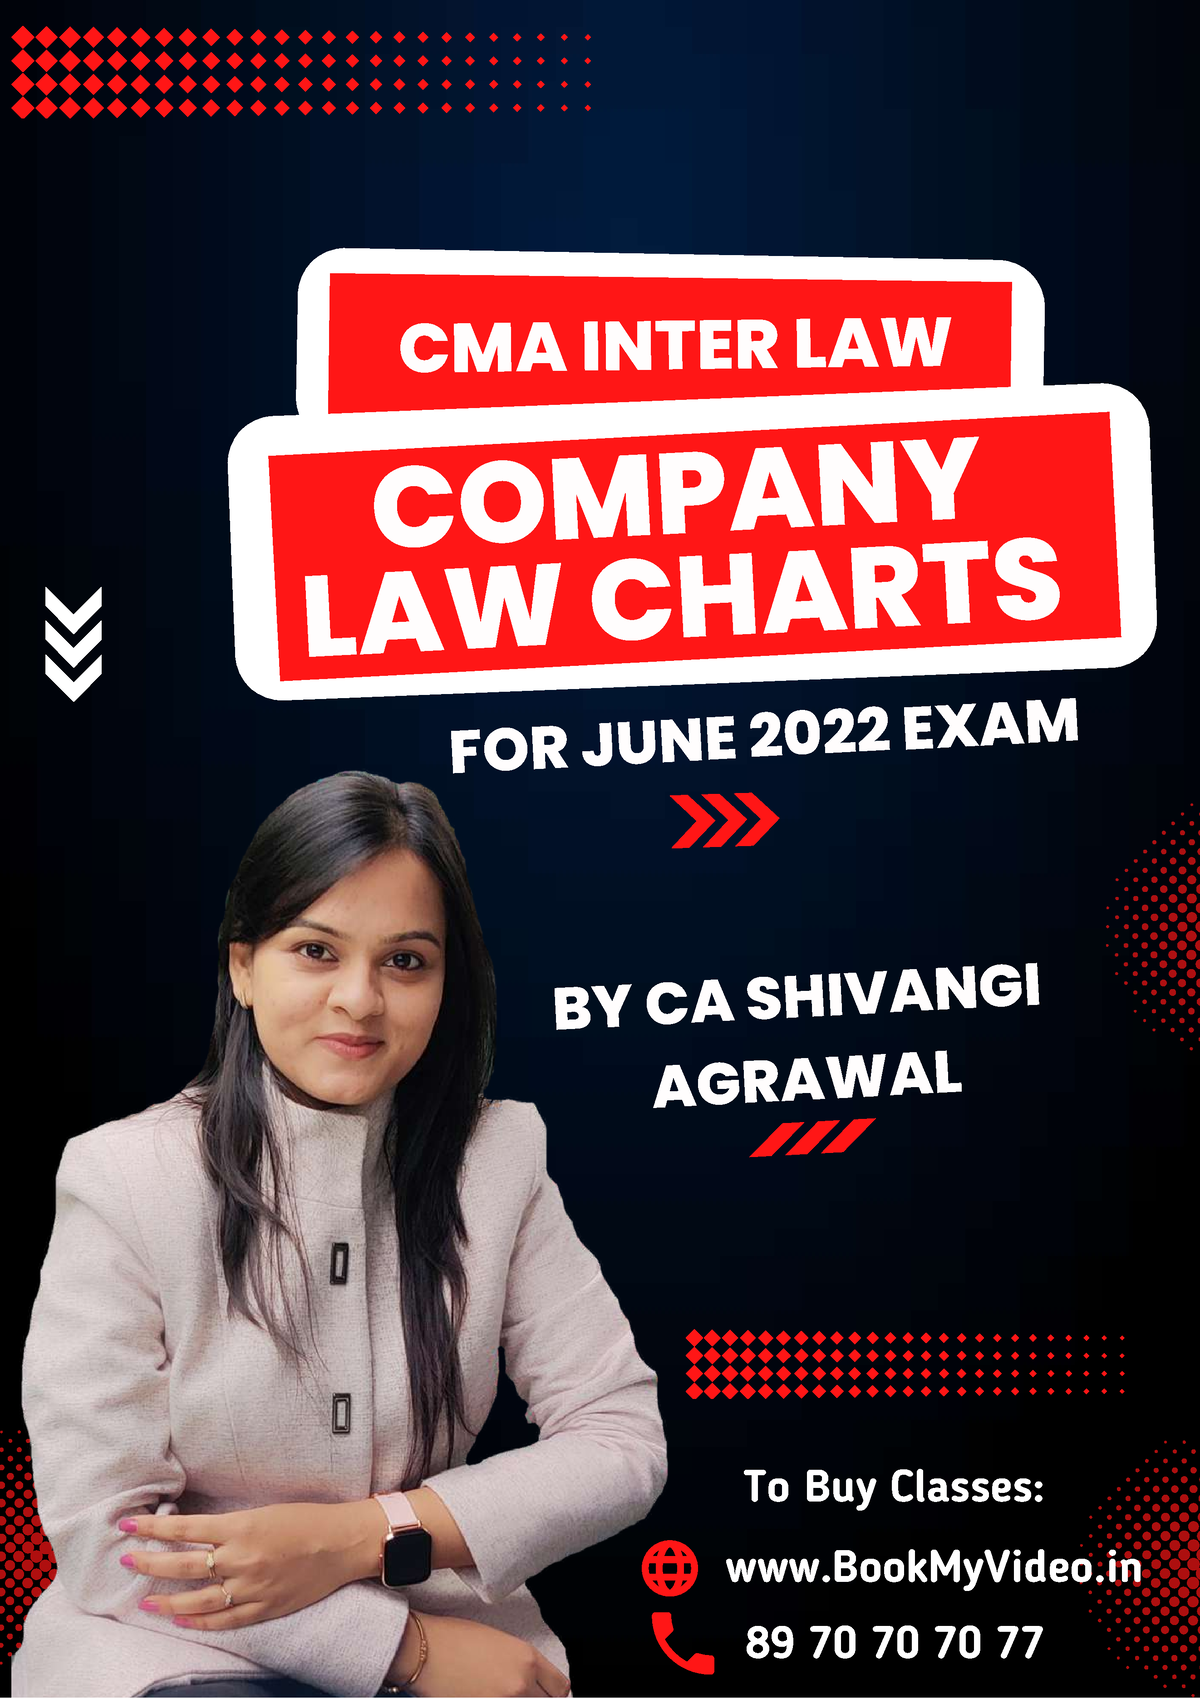 CMA Inter Law Company Law Charts CMA INTER LAW COMPANY LAW CHARTS